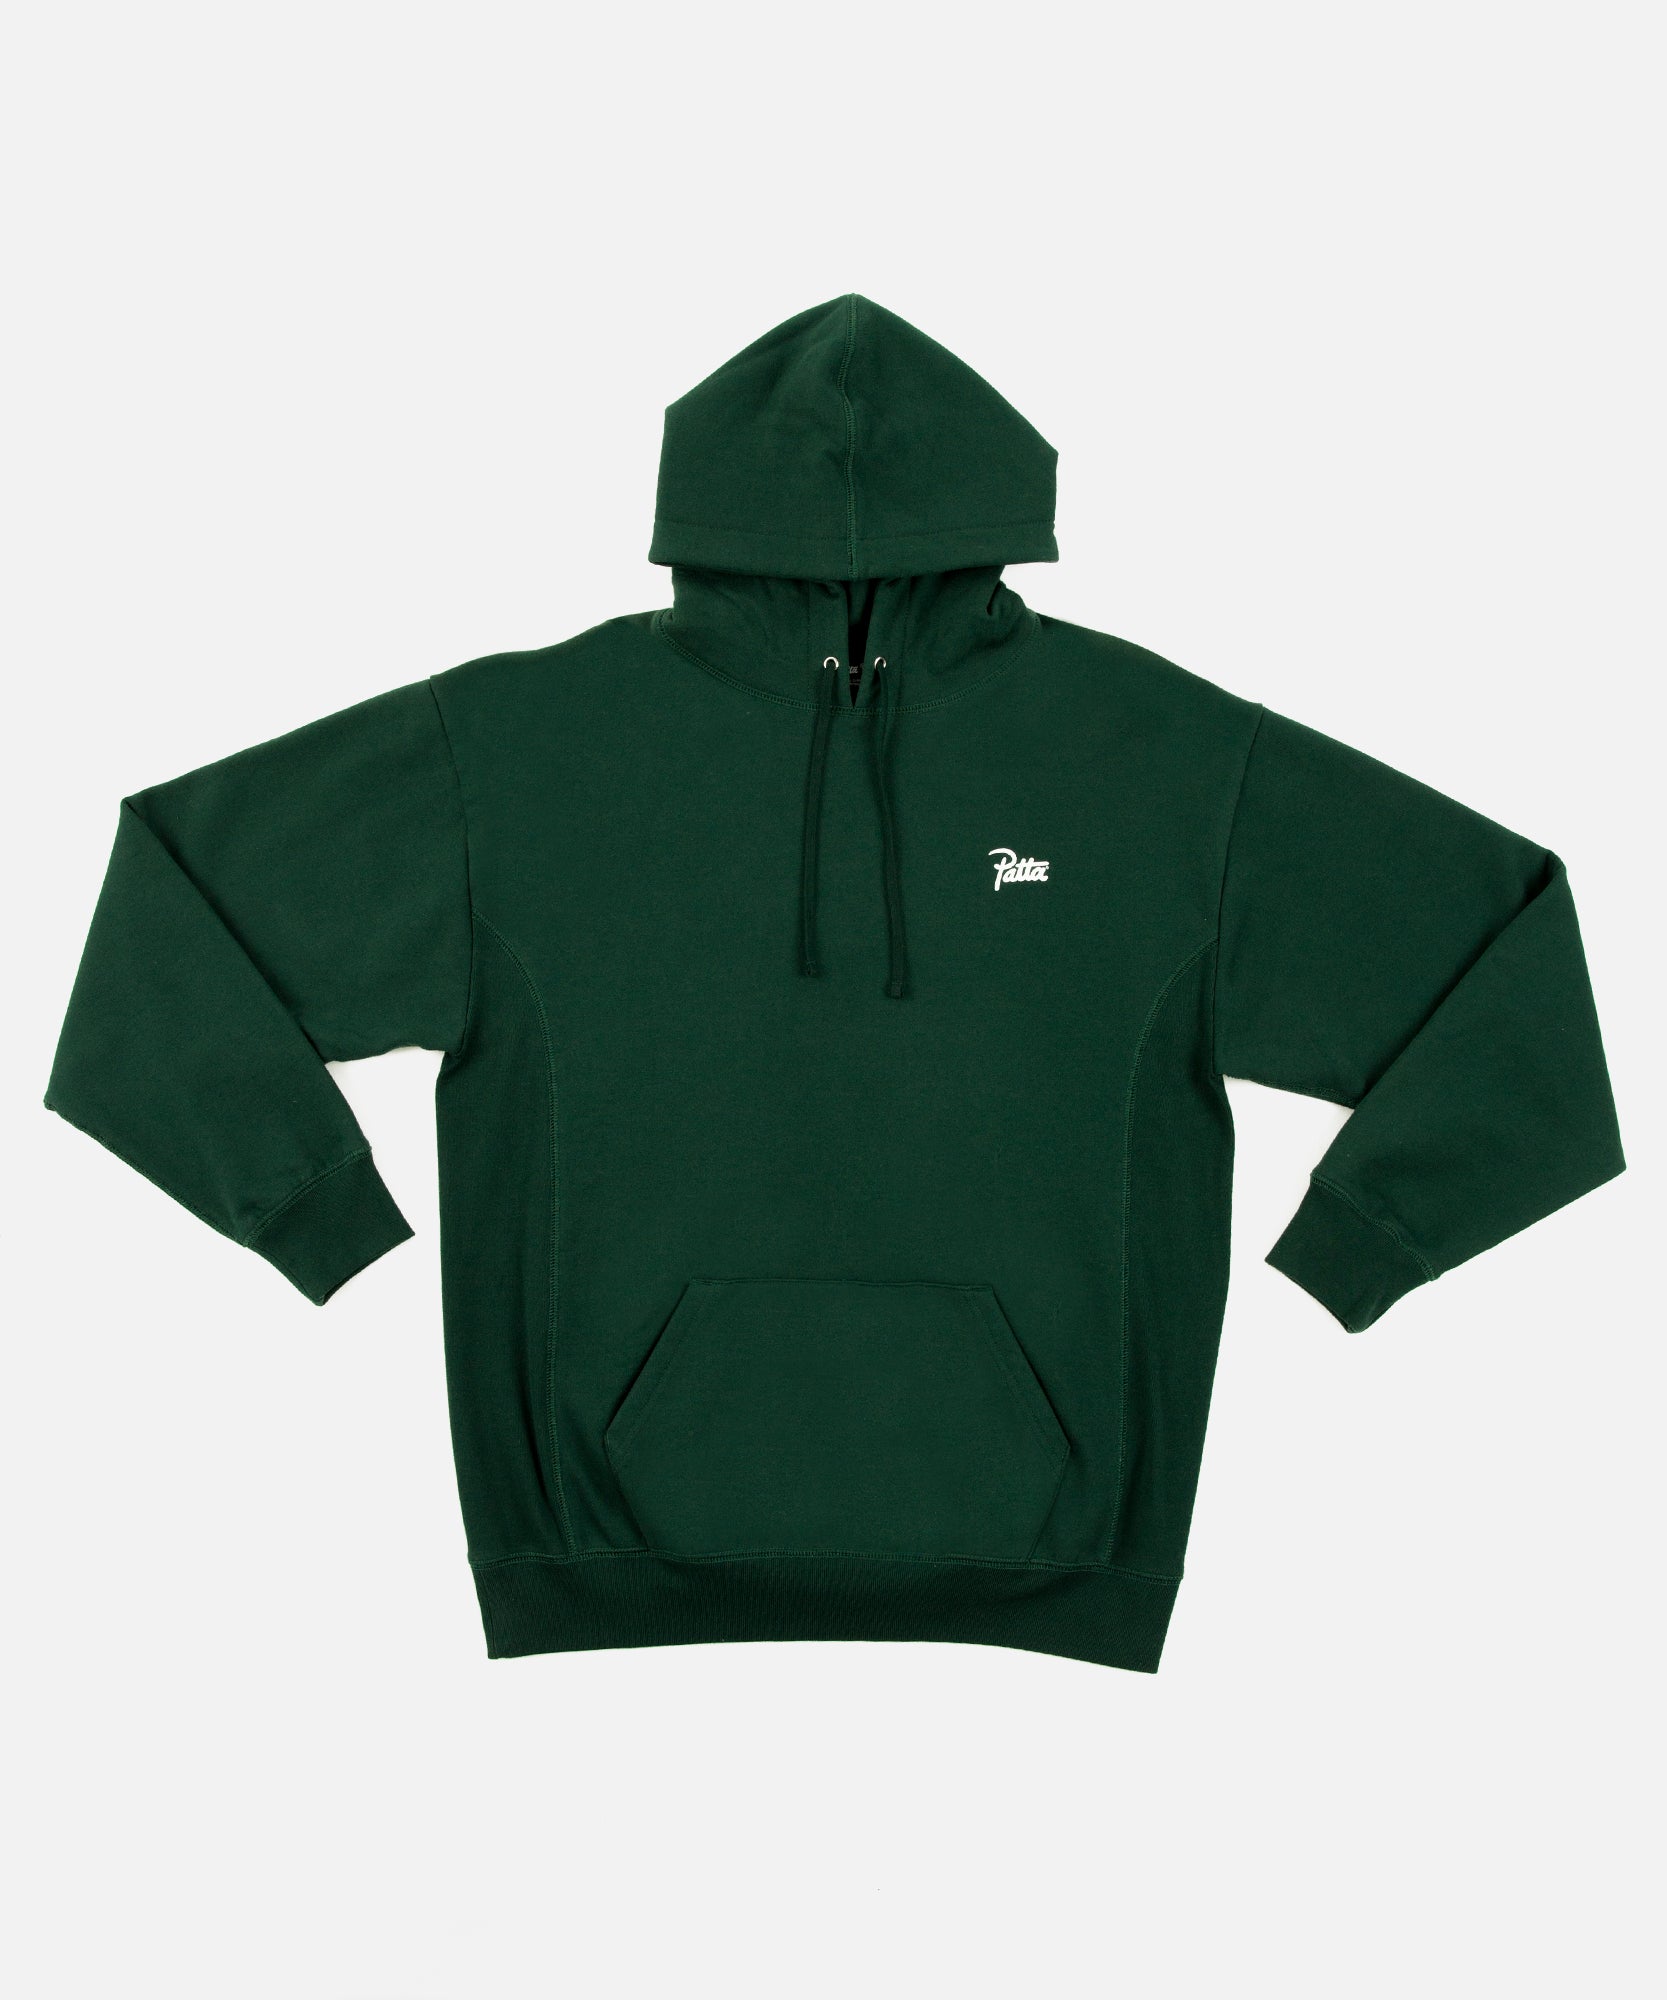 pine green and black hoodie